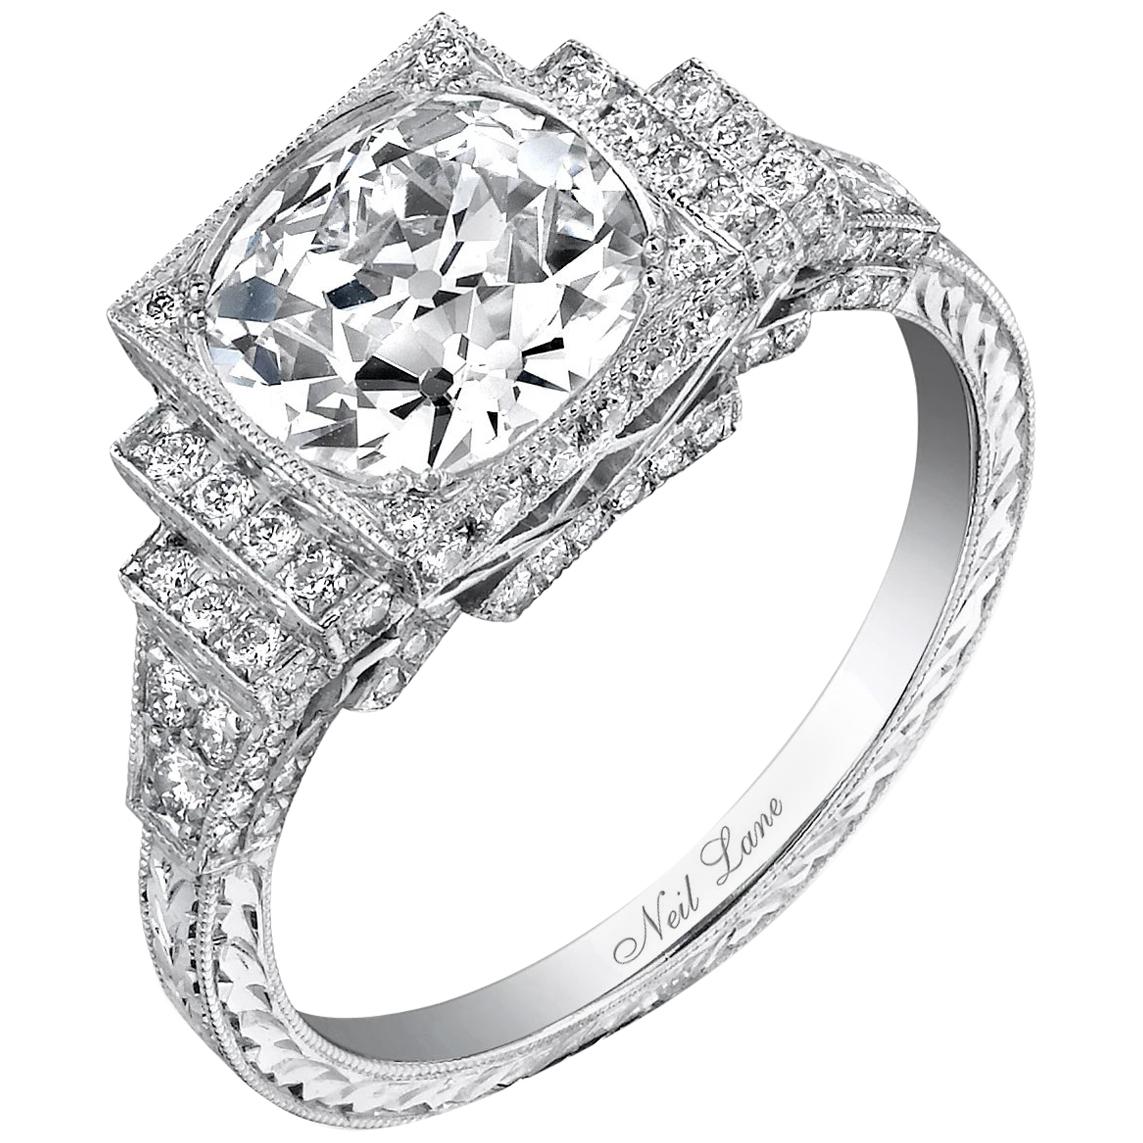 Neil Lane Couture Design Old European-Cut Diamond, Platinum Ring For Sale